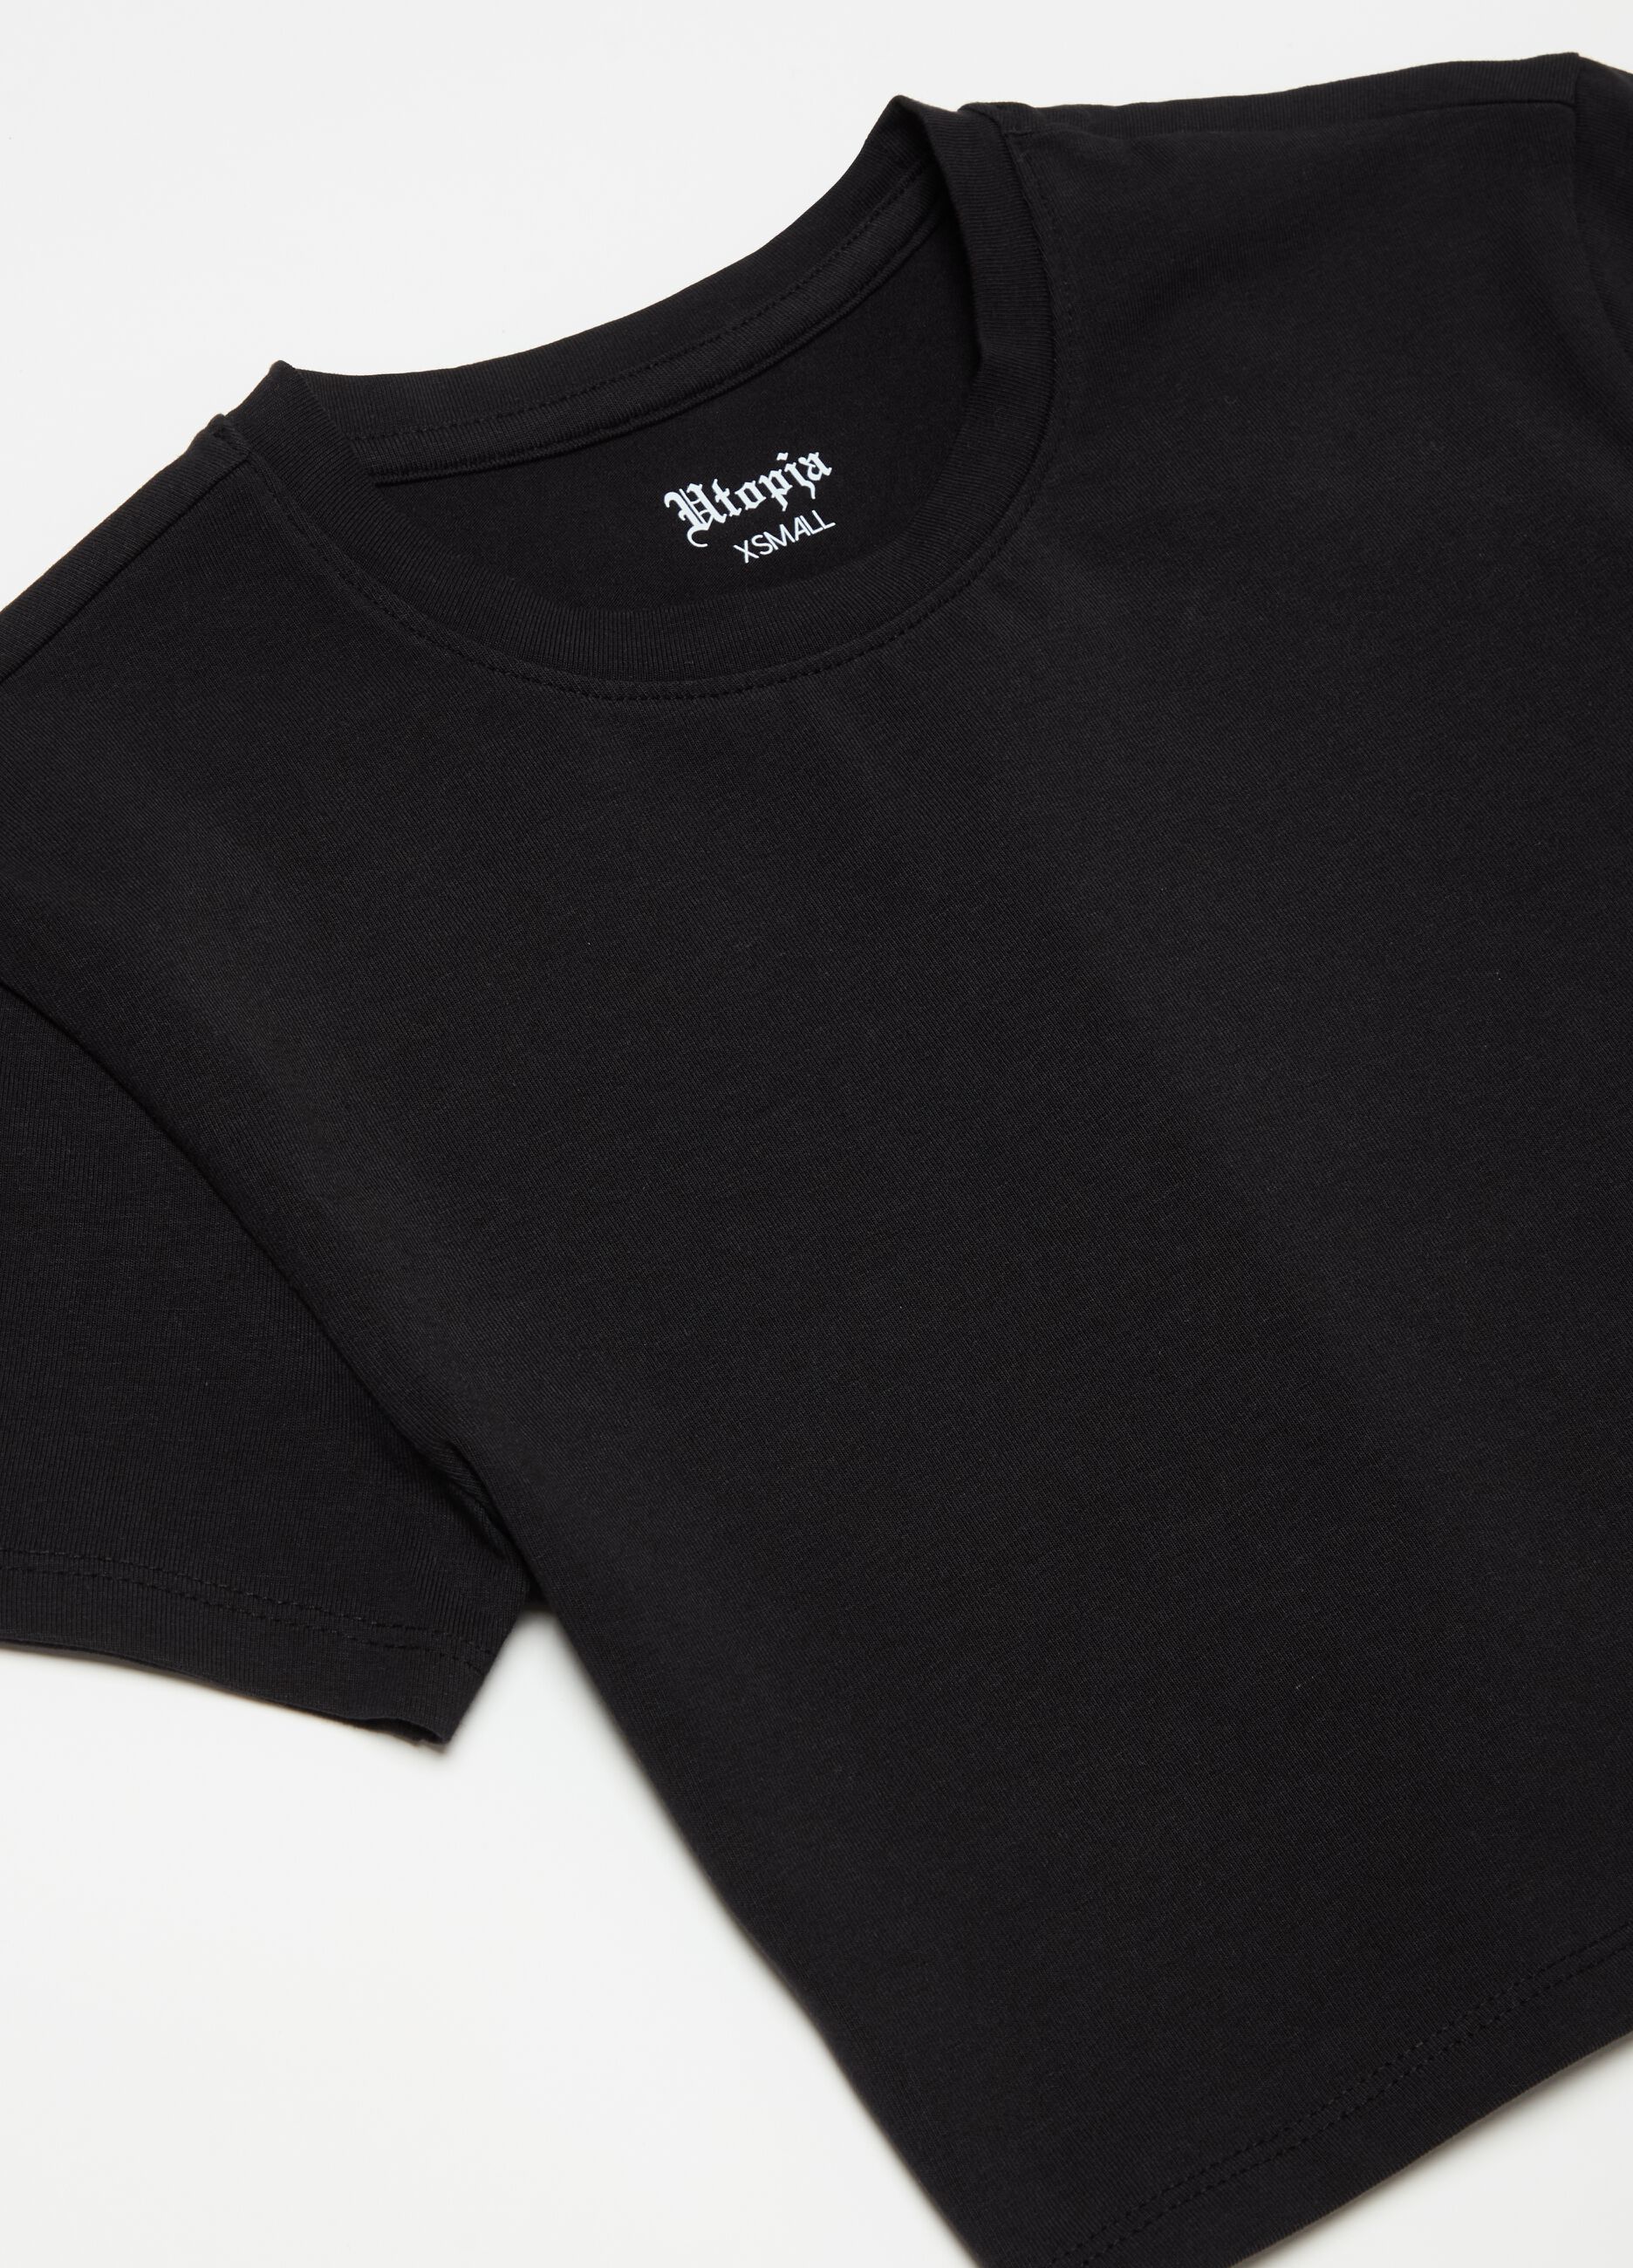 Crop T-shirt Black